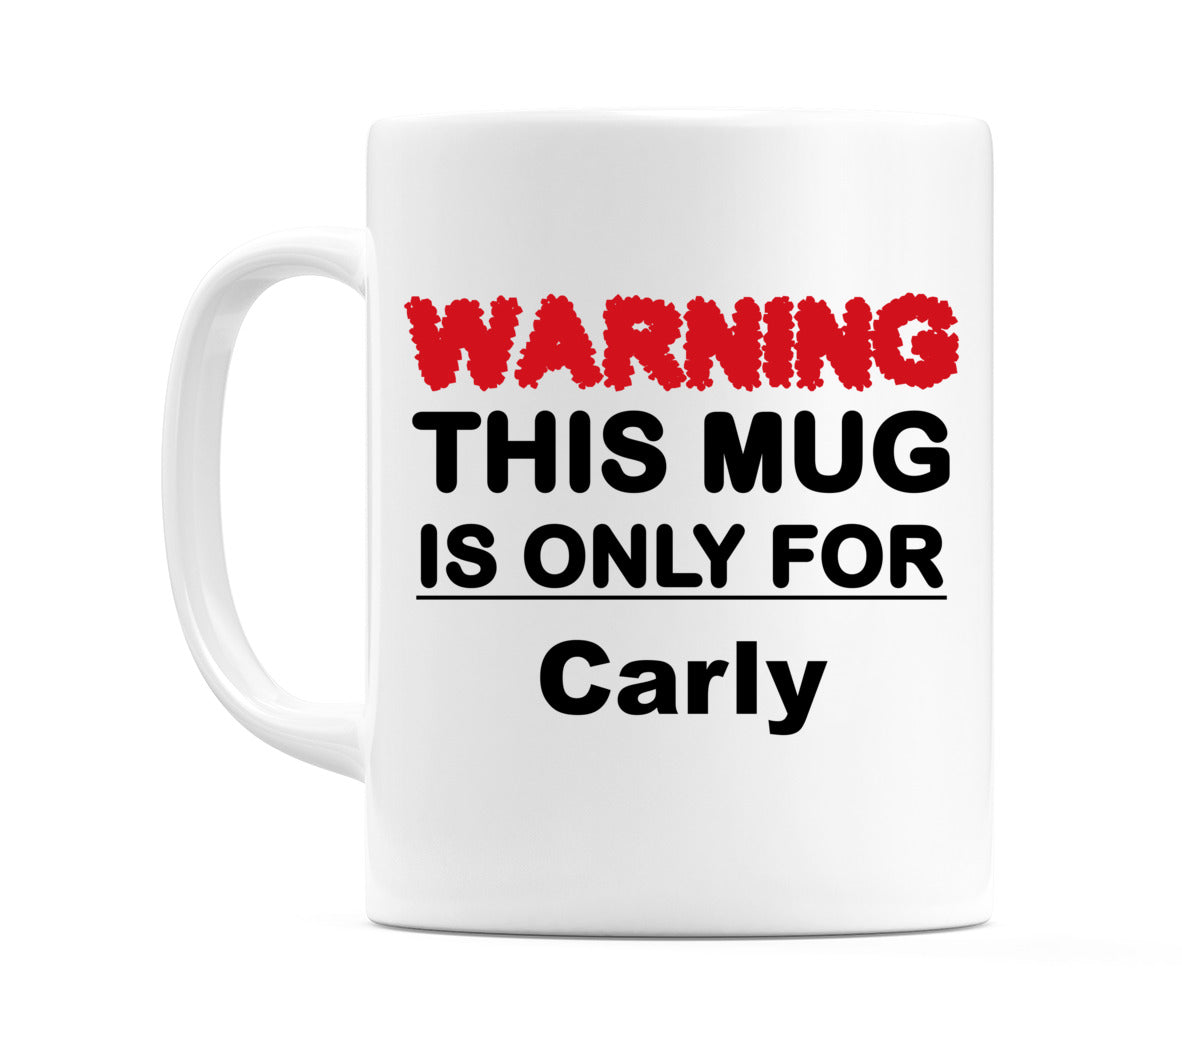 Warning This Mug is ONLY for Carly Mug